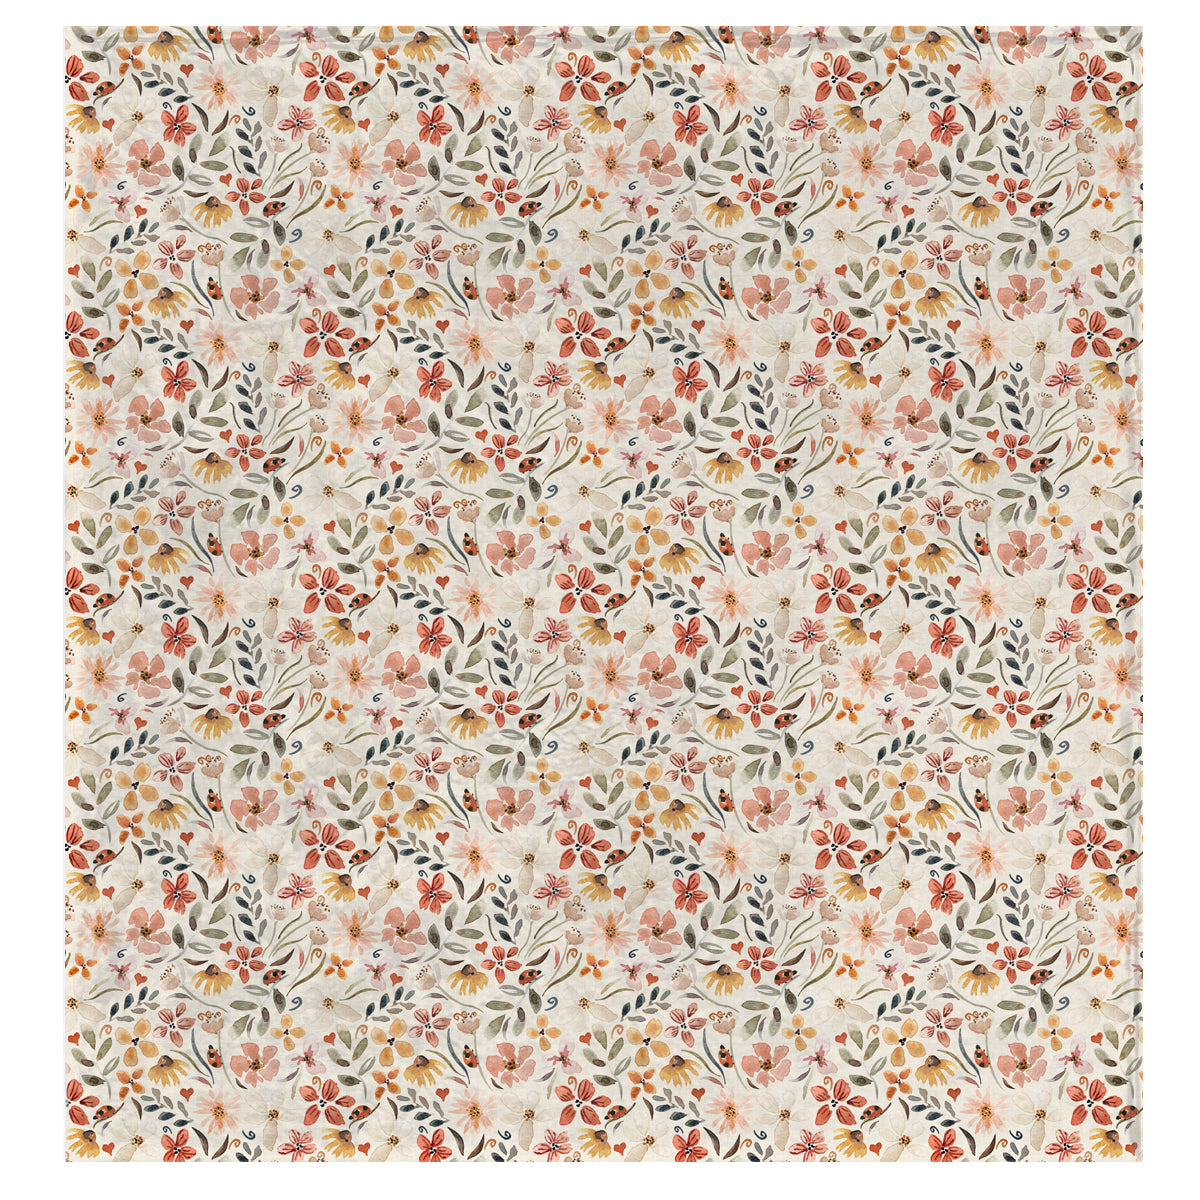 Bloom - Plush Blanket